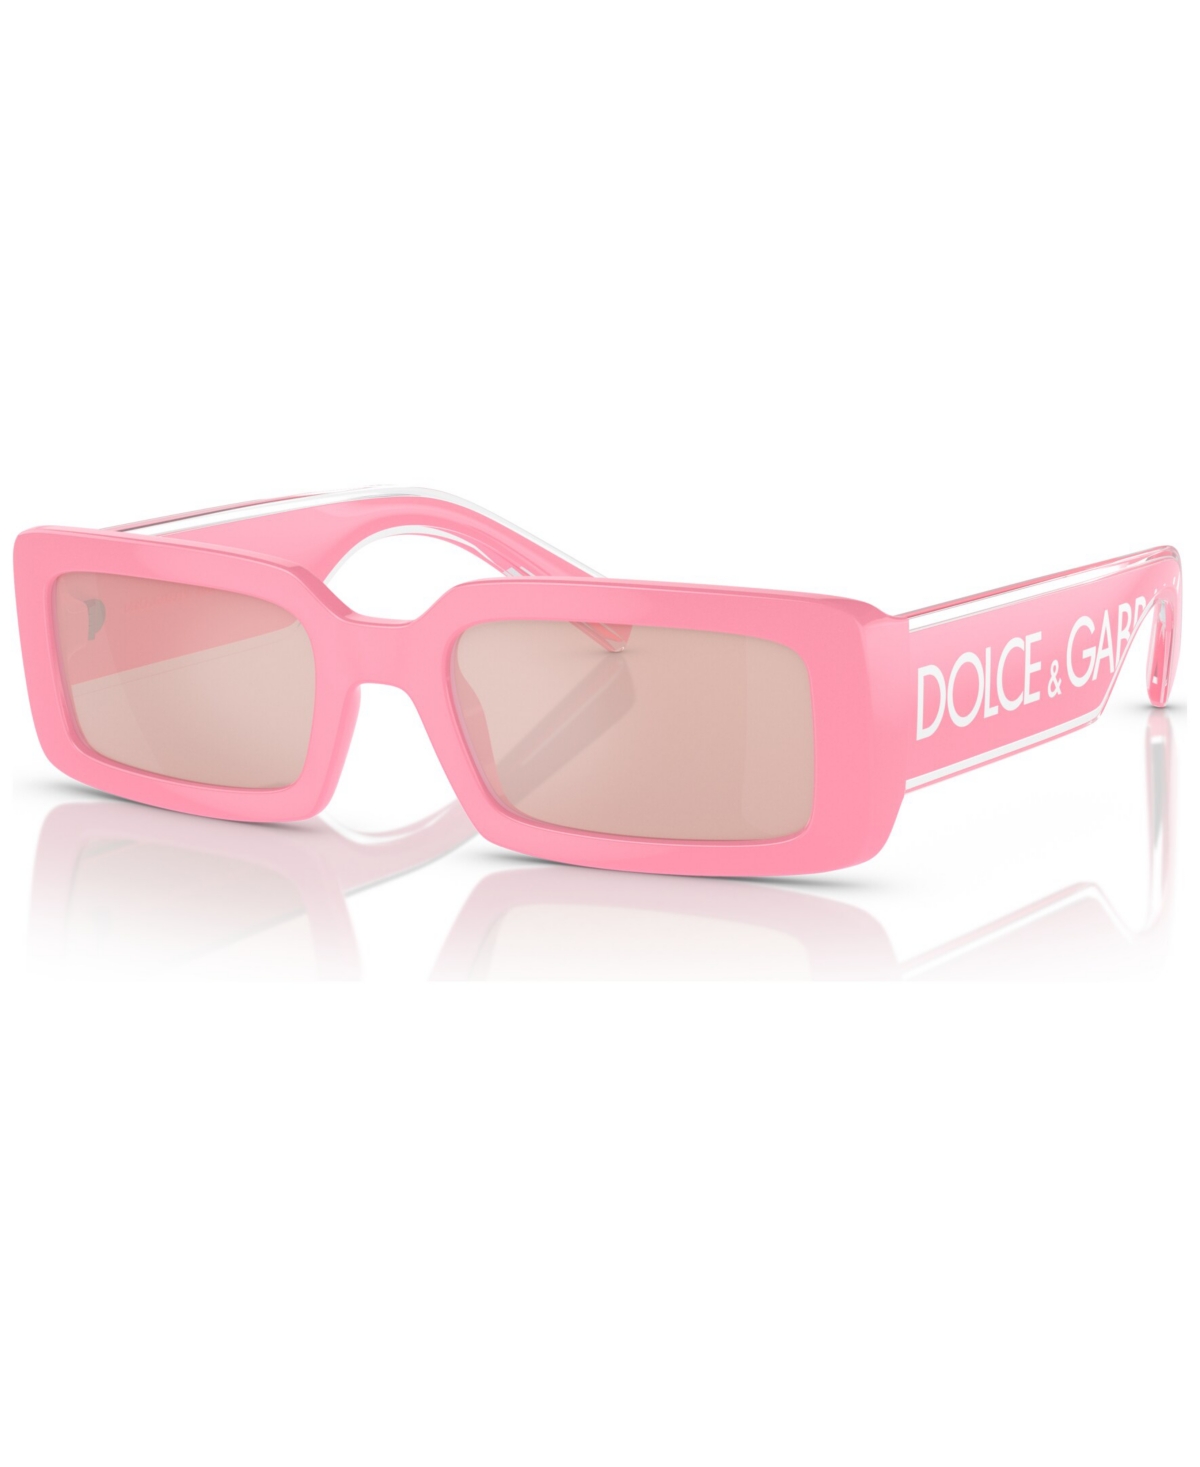 Dolce & Gabbana Dolce&gabbana Woman Sunglasses Dg6187 In Light Pink Mirror Silver